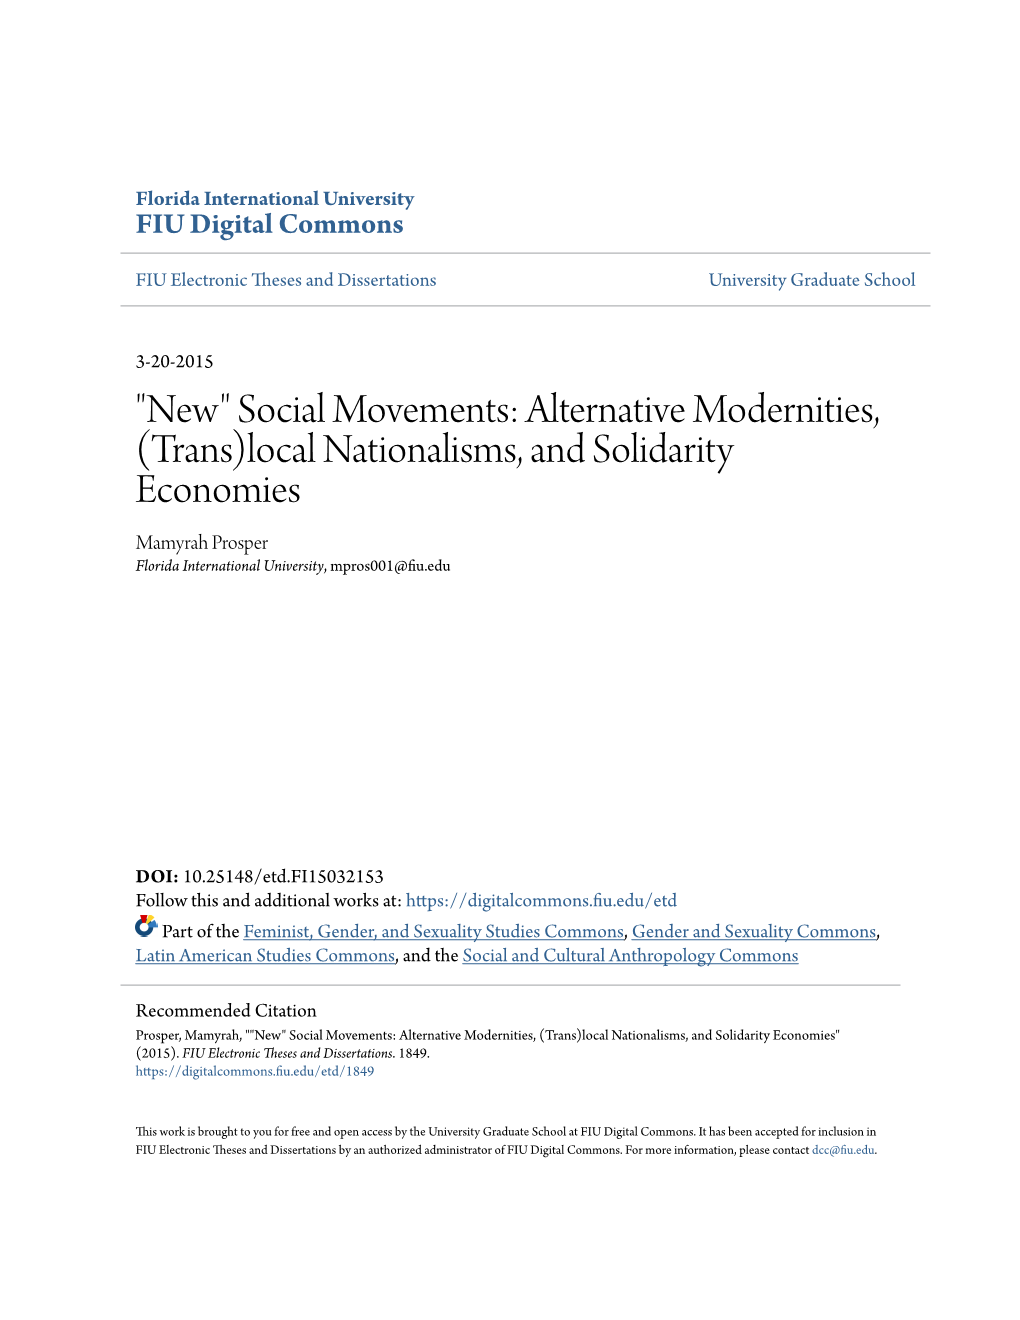 Social Movements: Alternative Modernities, (Trans)Local Nationalisms, and Solidarity Economies Mamyrah Prosper Florida International University, Mpros001@Fiu.Edu